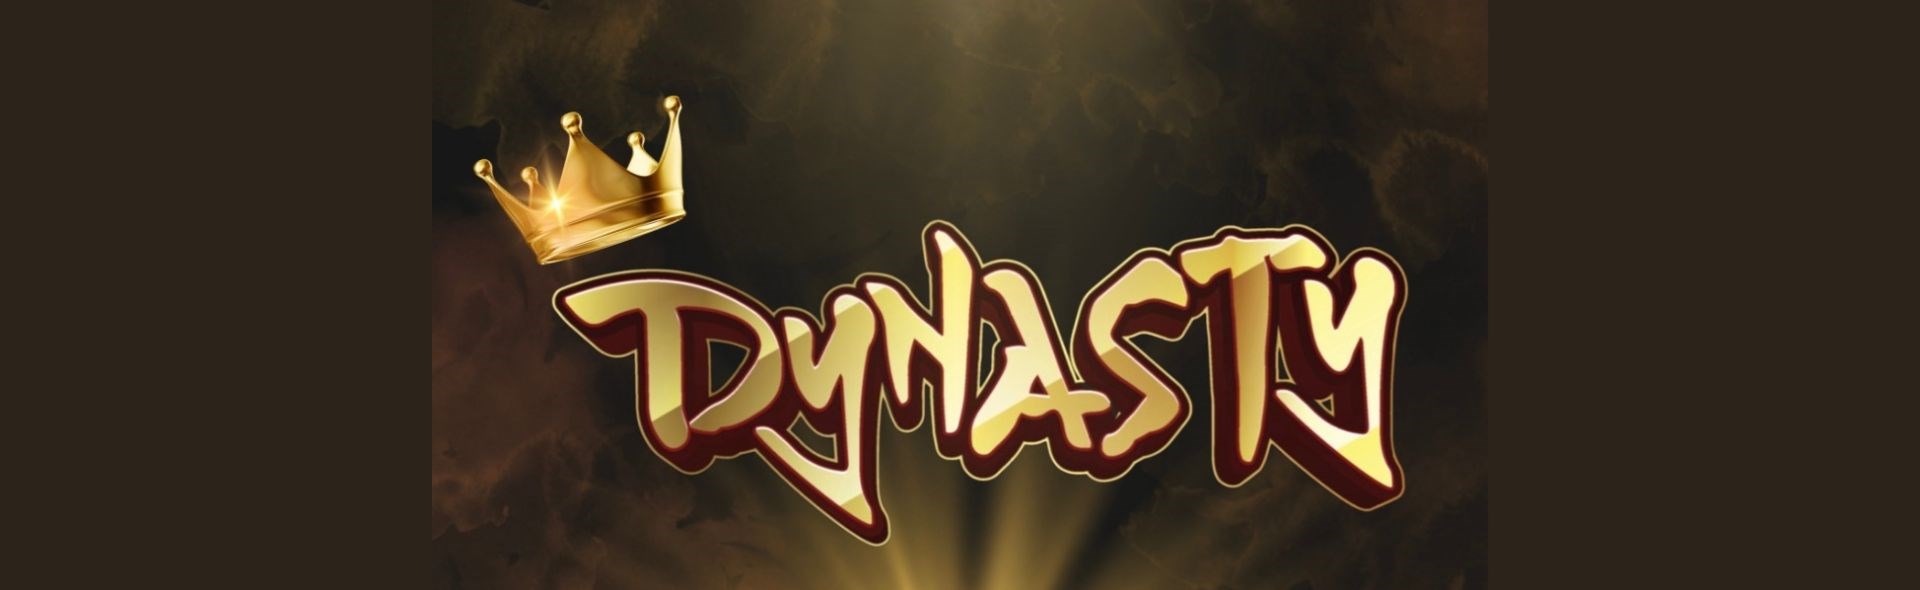 Upbeat Dance: Dynasty